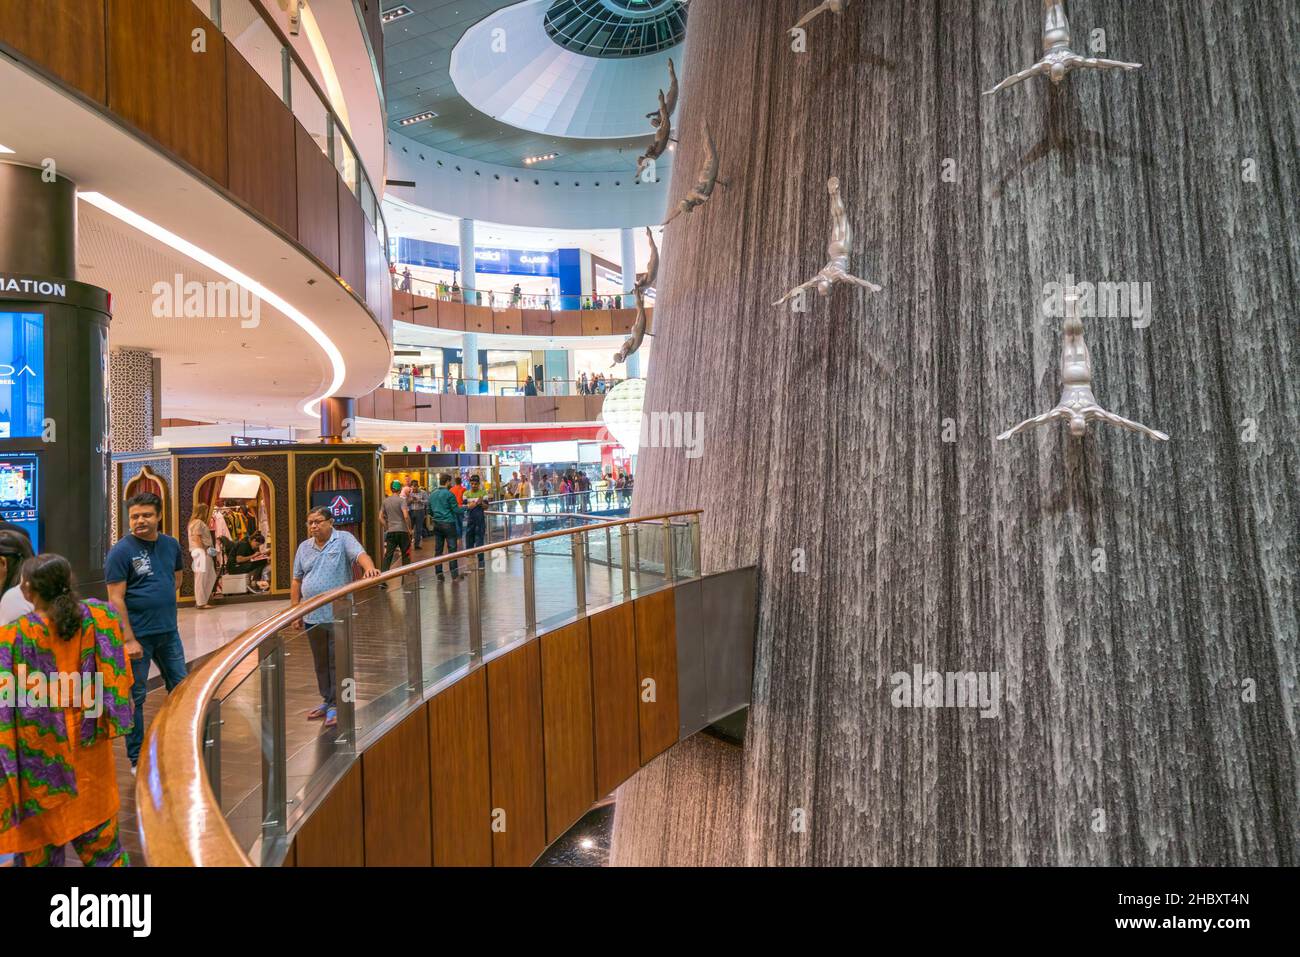 Dubai, UAE - 11.02.2017: People walking around in the Dubai Mall, big modern luxury shopping center. Stock Photo